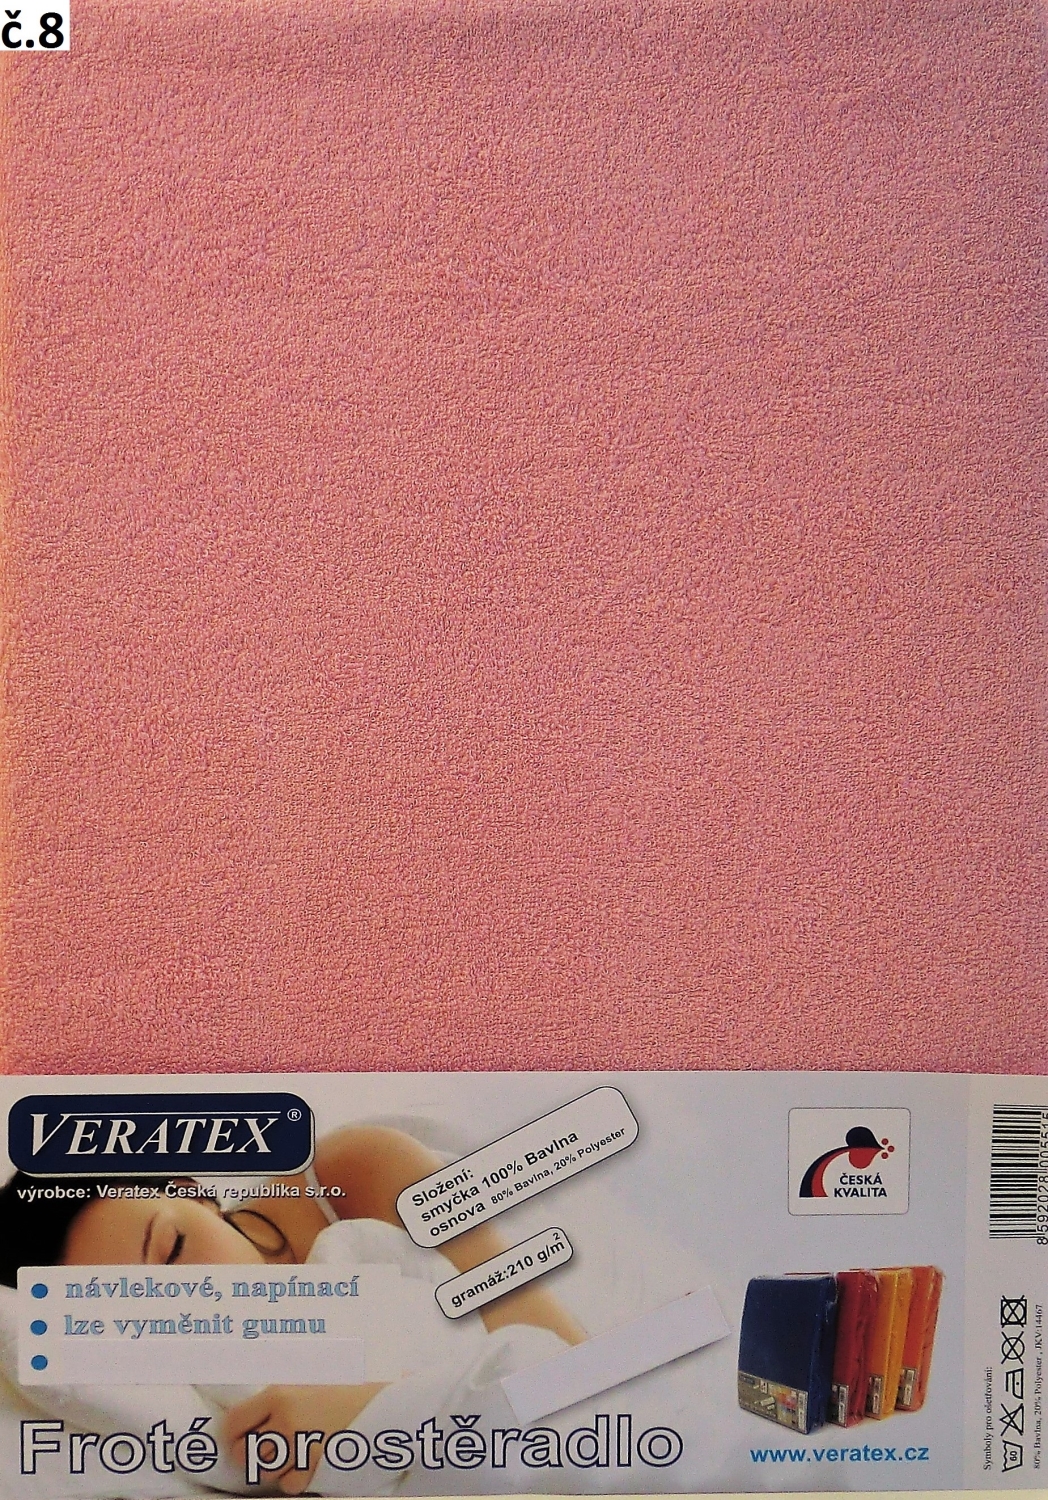 Veratex Froté prostěradlo 180x220/16 cm (č. 8-růžová)